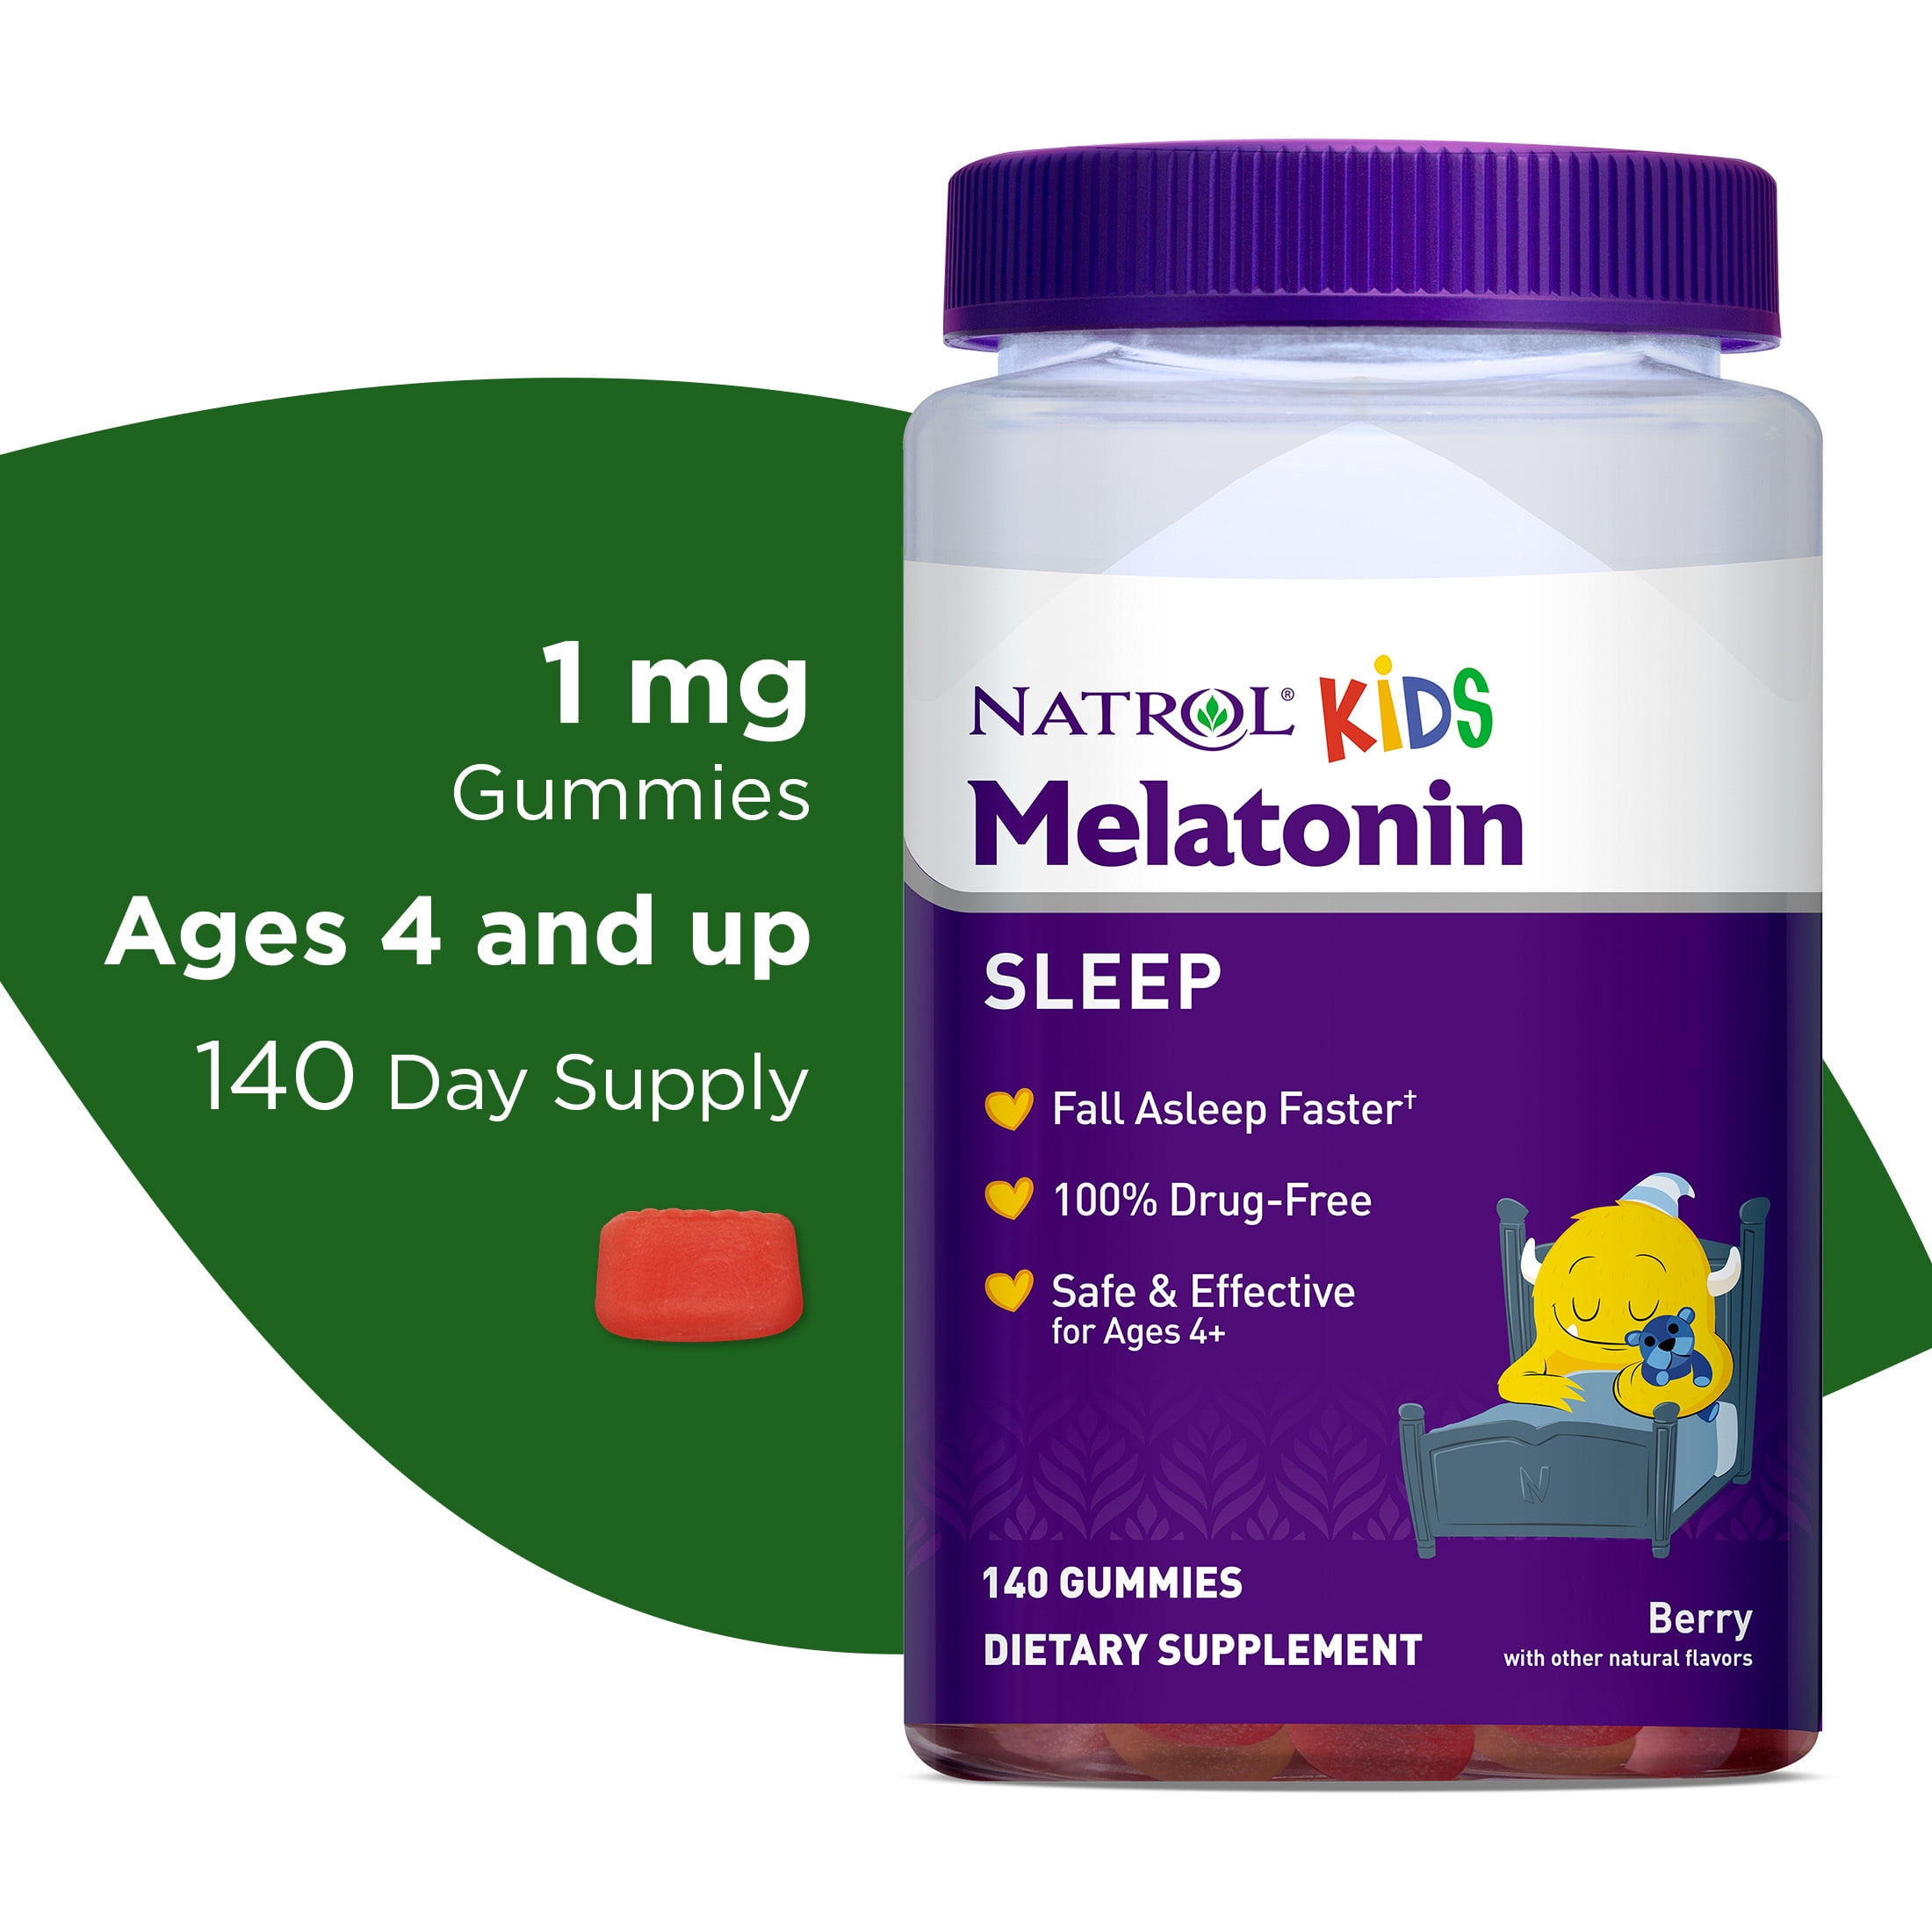 Natrol Kids Melatonin Sleep Aid Gummies, Ages 4 and Up, Drug-Free, Berry, 1mg, 140 Count